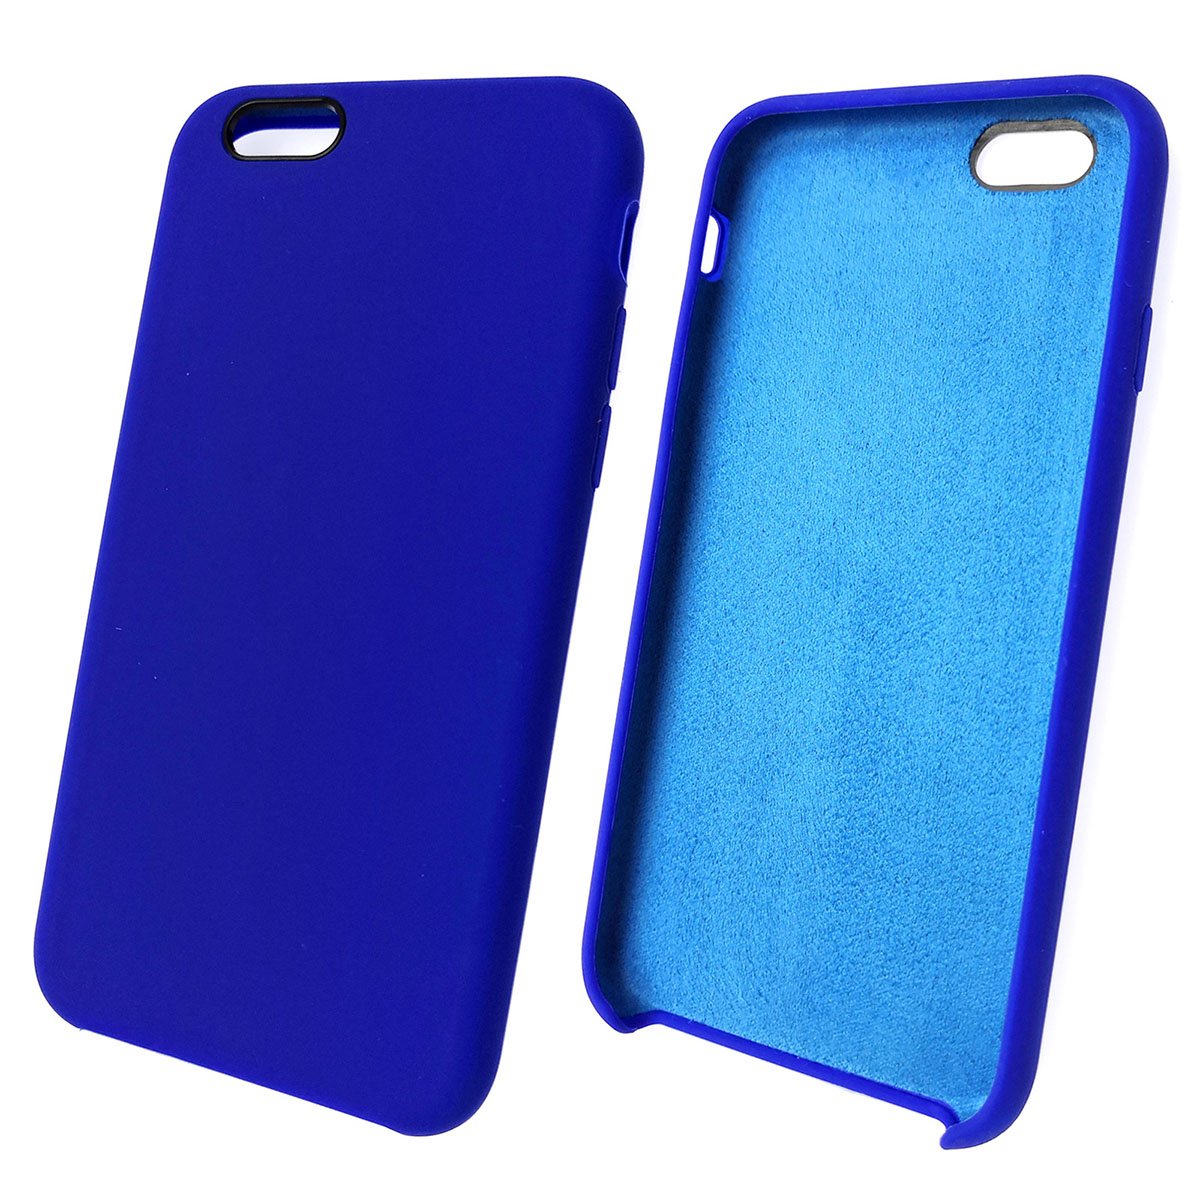 Чехол накладка Silicon Case для APPLE iPhone 6, 6G, 6S, силикон, бархат, цвет ярко синий.